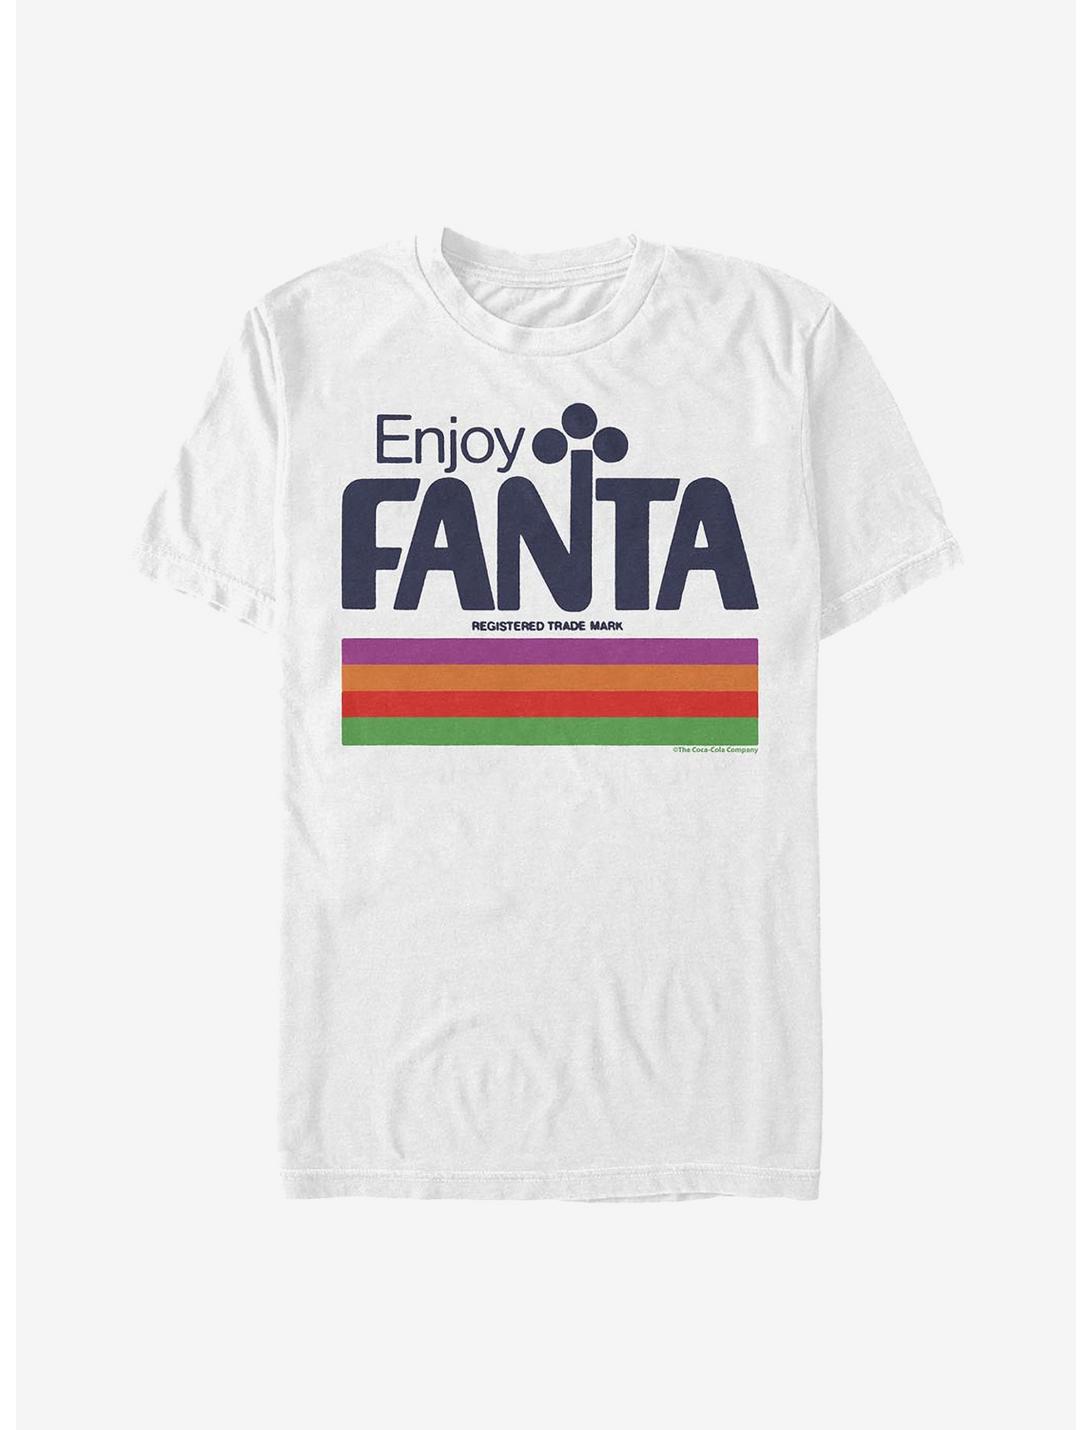 Coca-Cola Retro Fanta T-Shirt, WHITE, hi-res